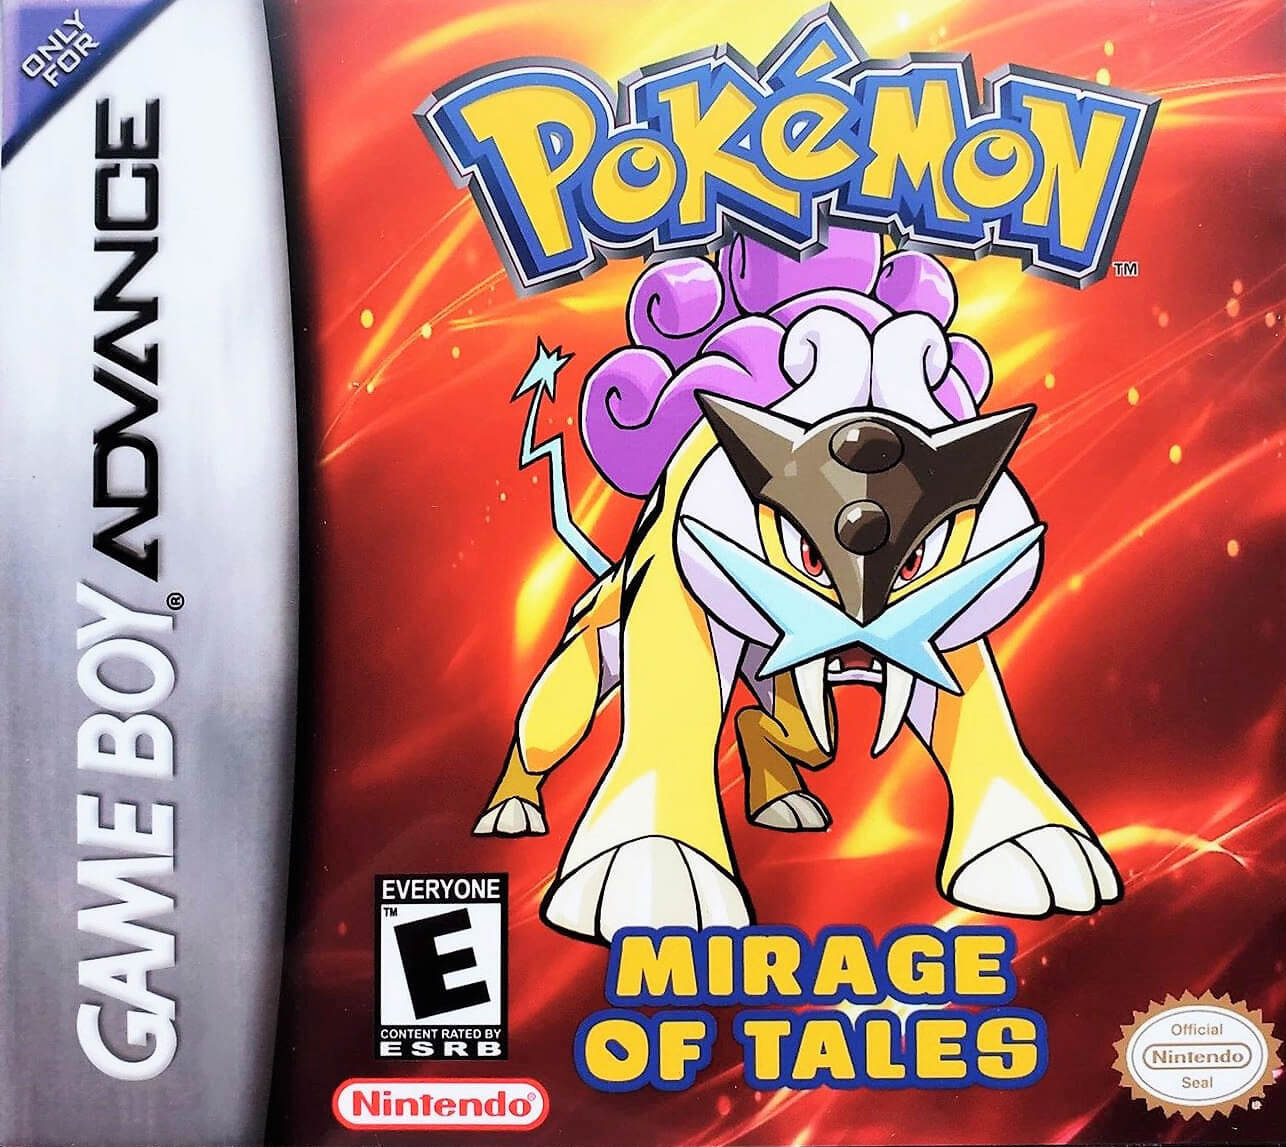 Pokémon Mirage of Tales